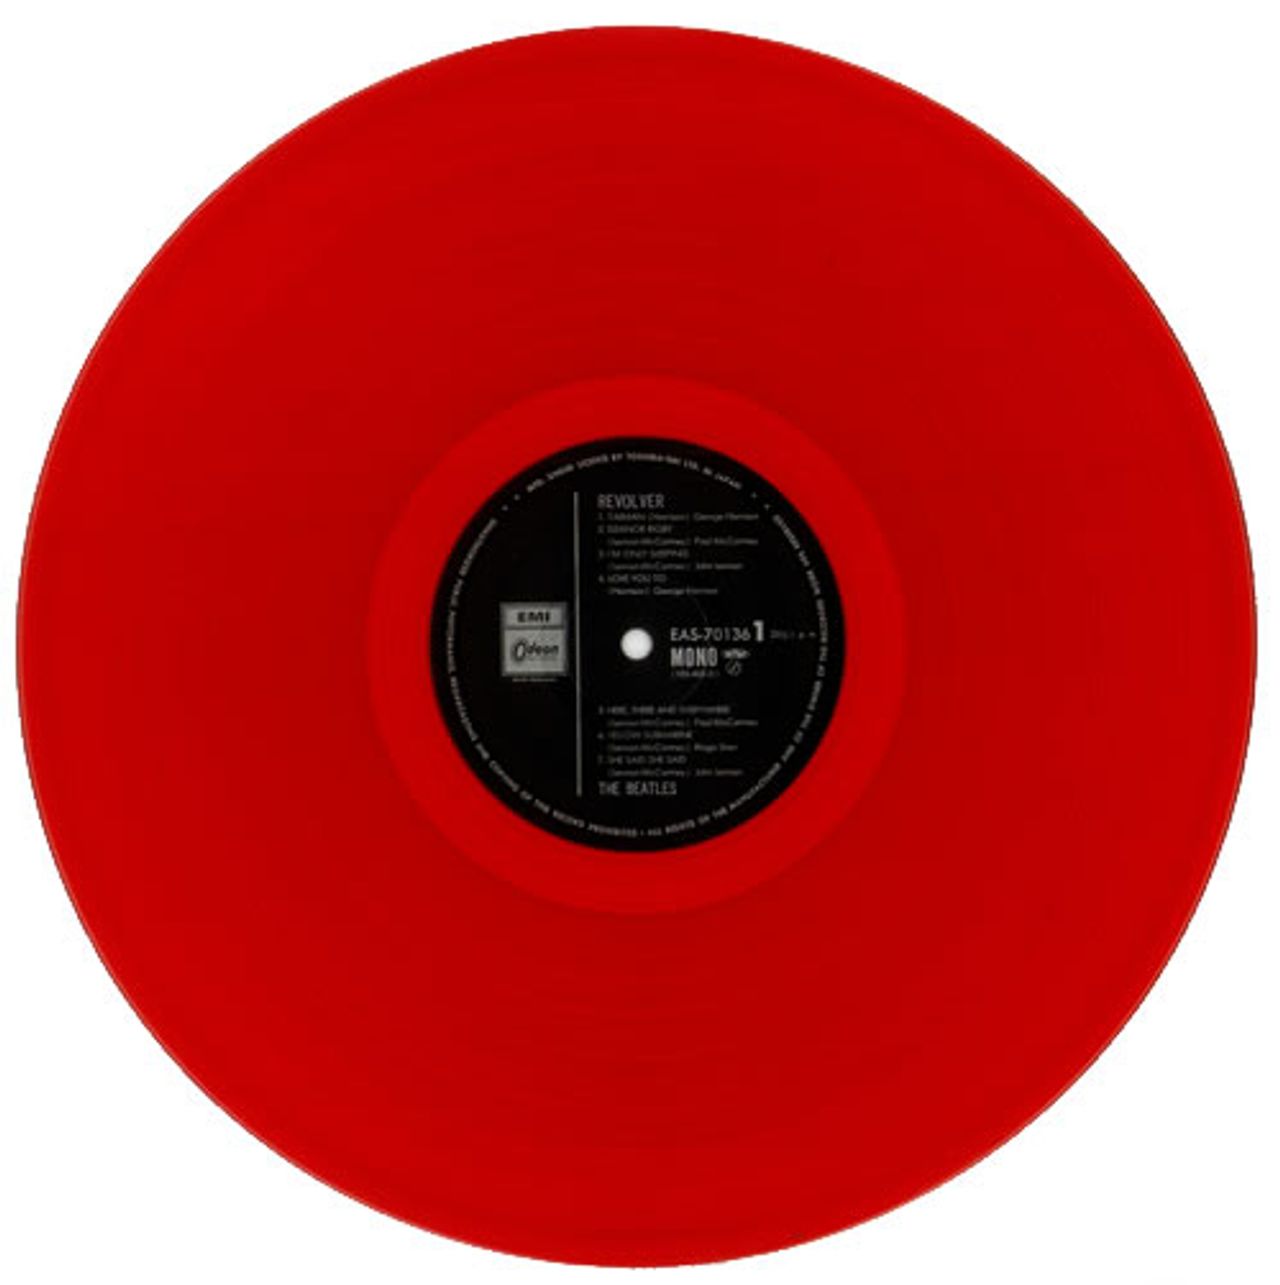 The Beatles Revolver - Red + 86 Obi Japanese Vinyl LP Album Record EAS-70136 EMI Odeon 1986